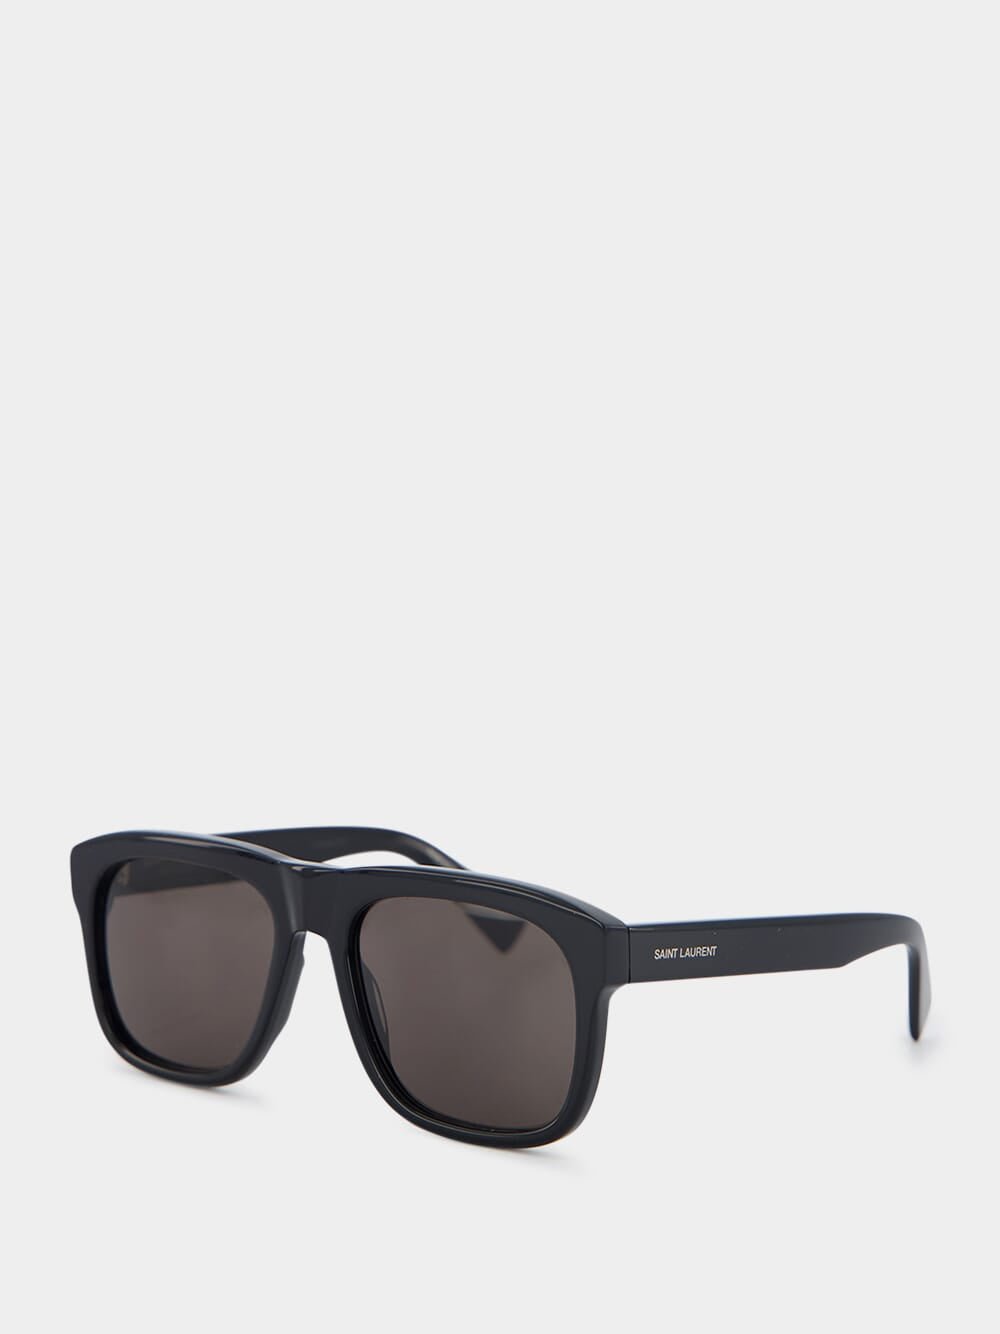 Saint LaurentSL 558 Classic Square-Frame Sunglasses at Fashion Clinic